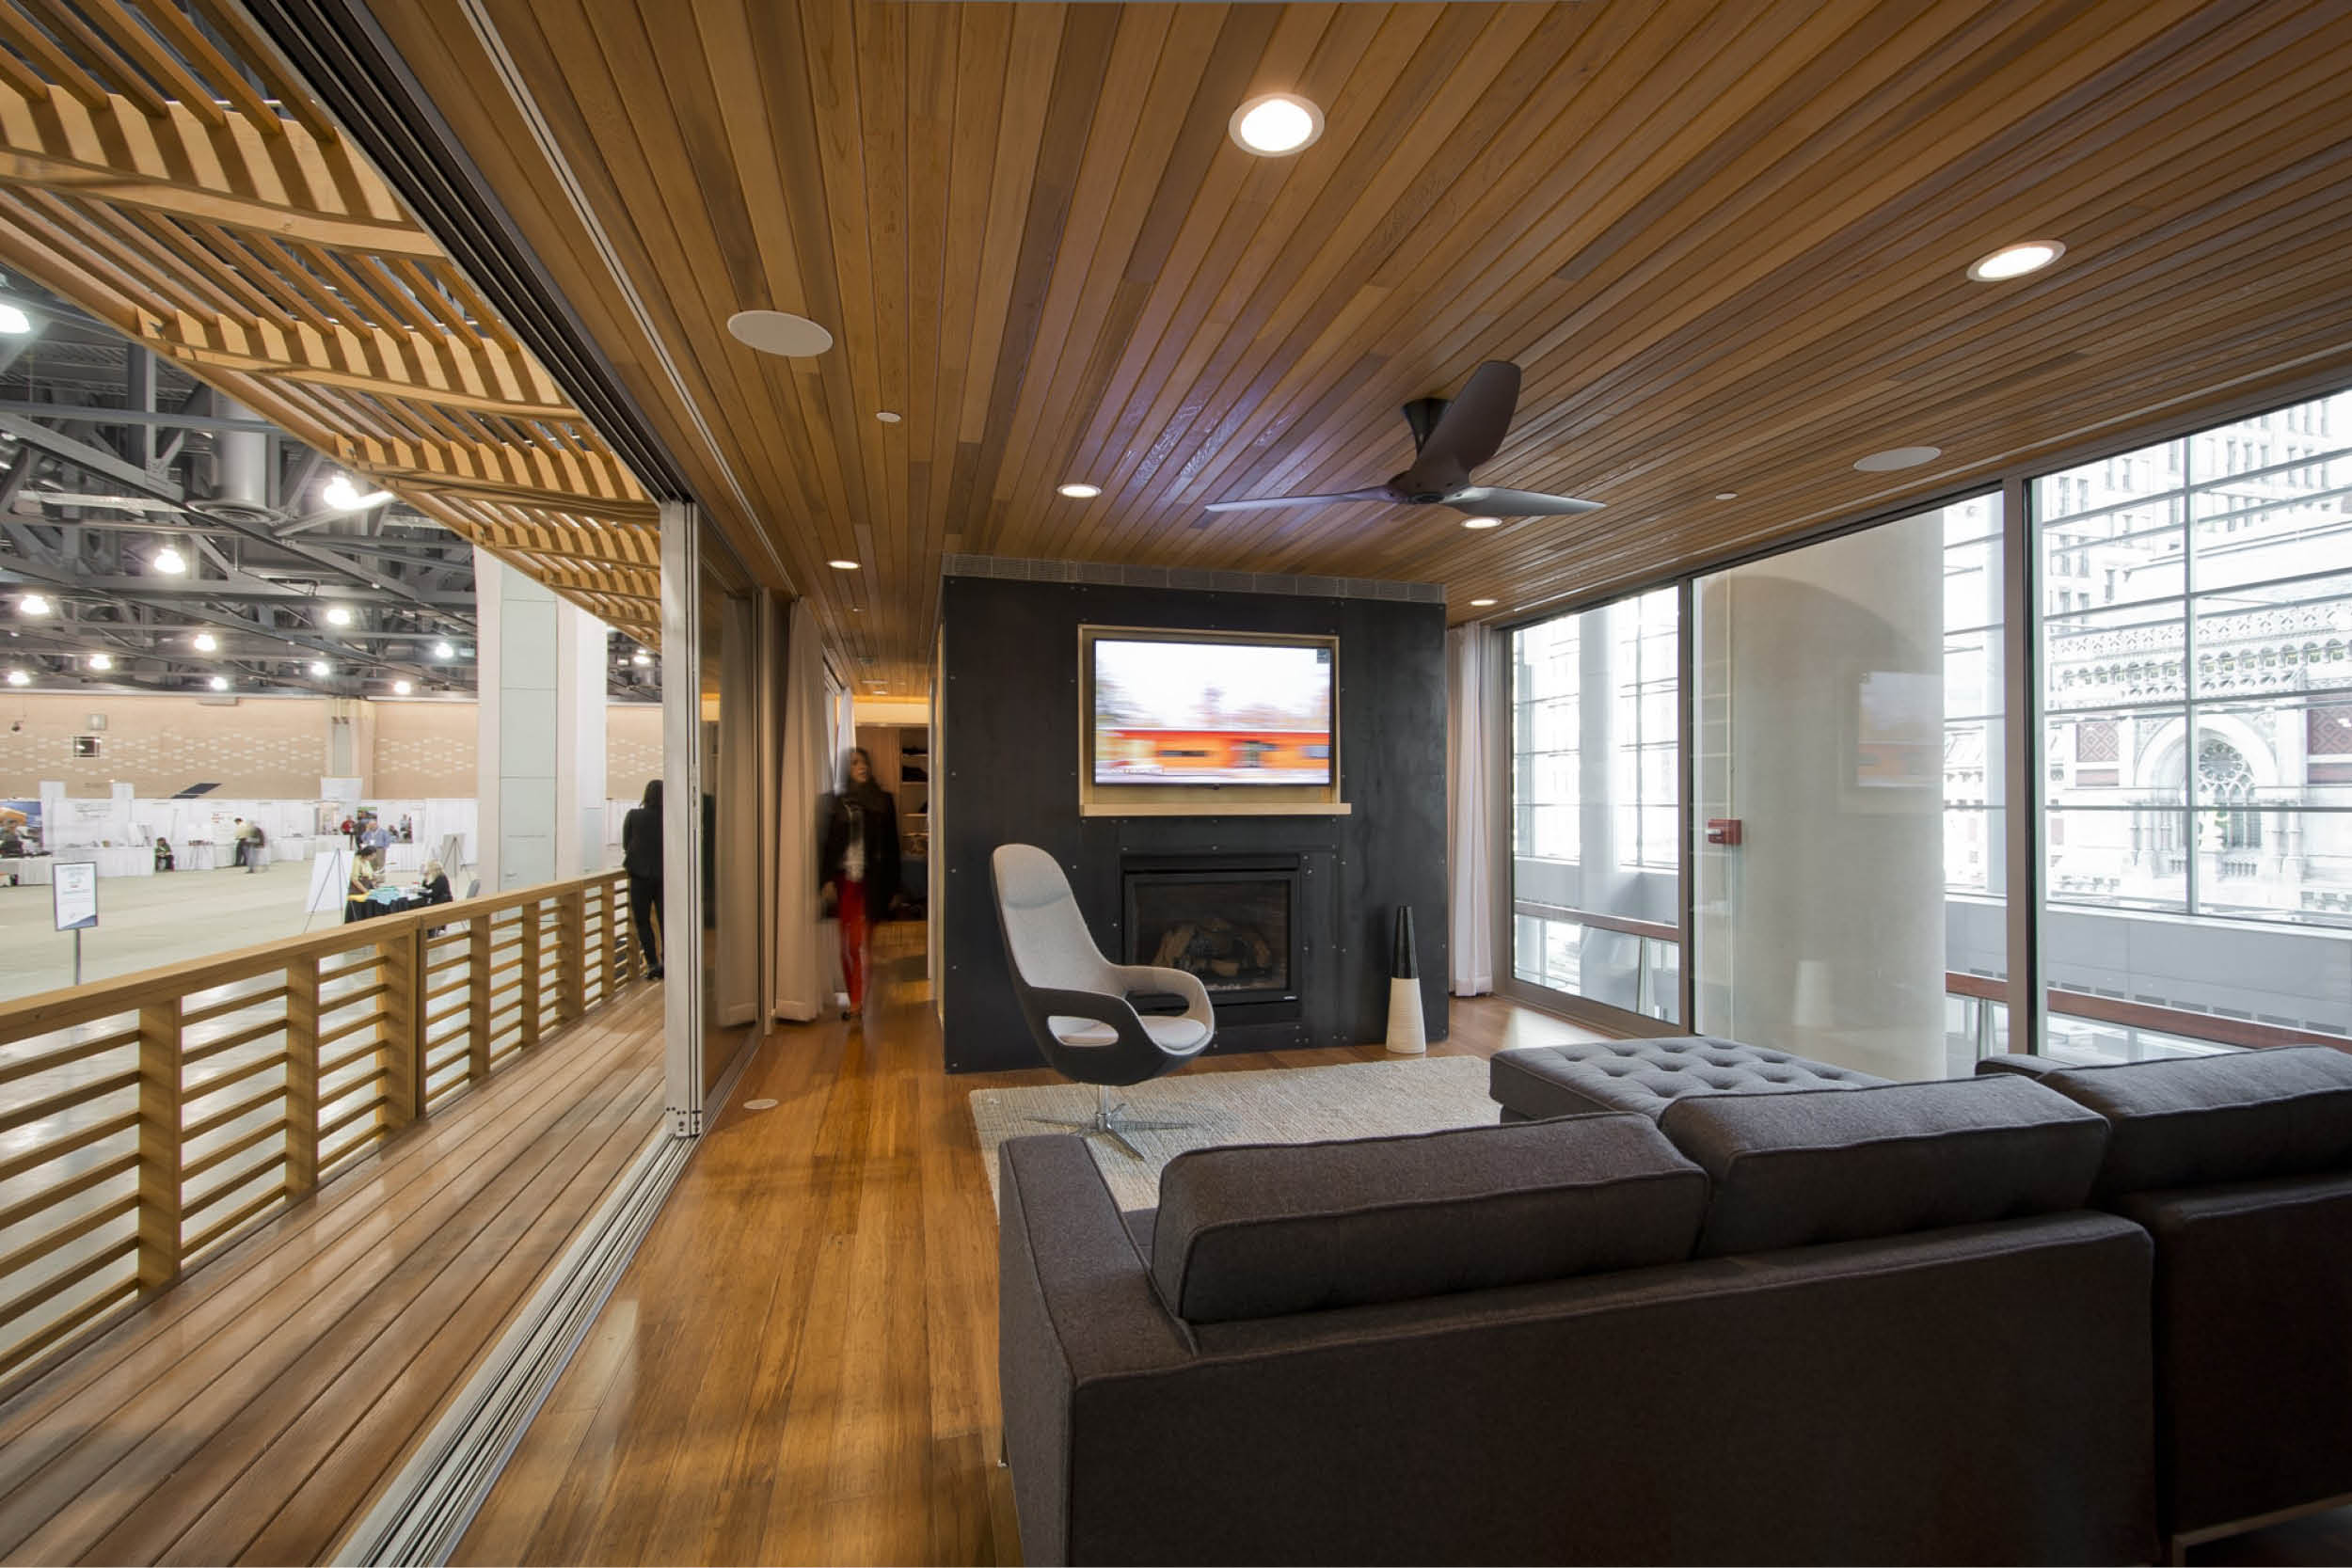 Modern Modular Prefab Cabin House | Greenbuild | Philadelphia | Living Room Cedar Ceiling Fireplace Black Steel Railing Deck Sliding Doors | RES4